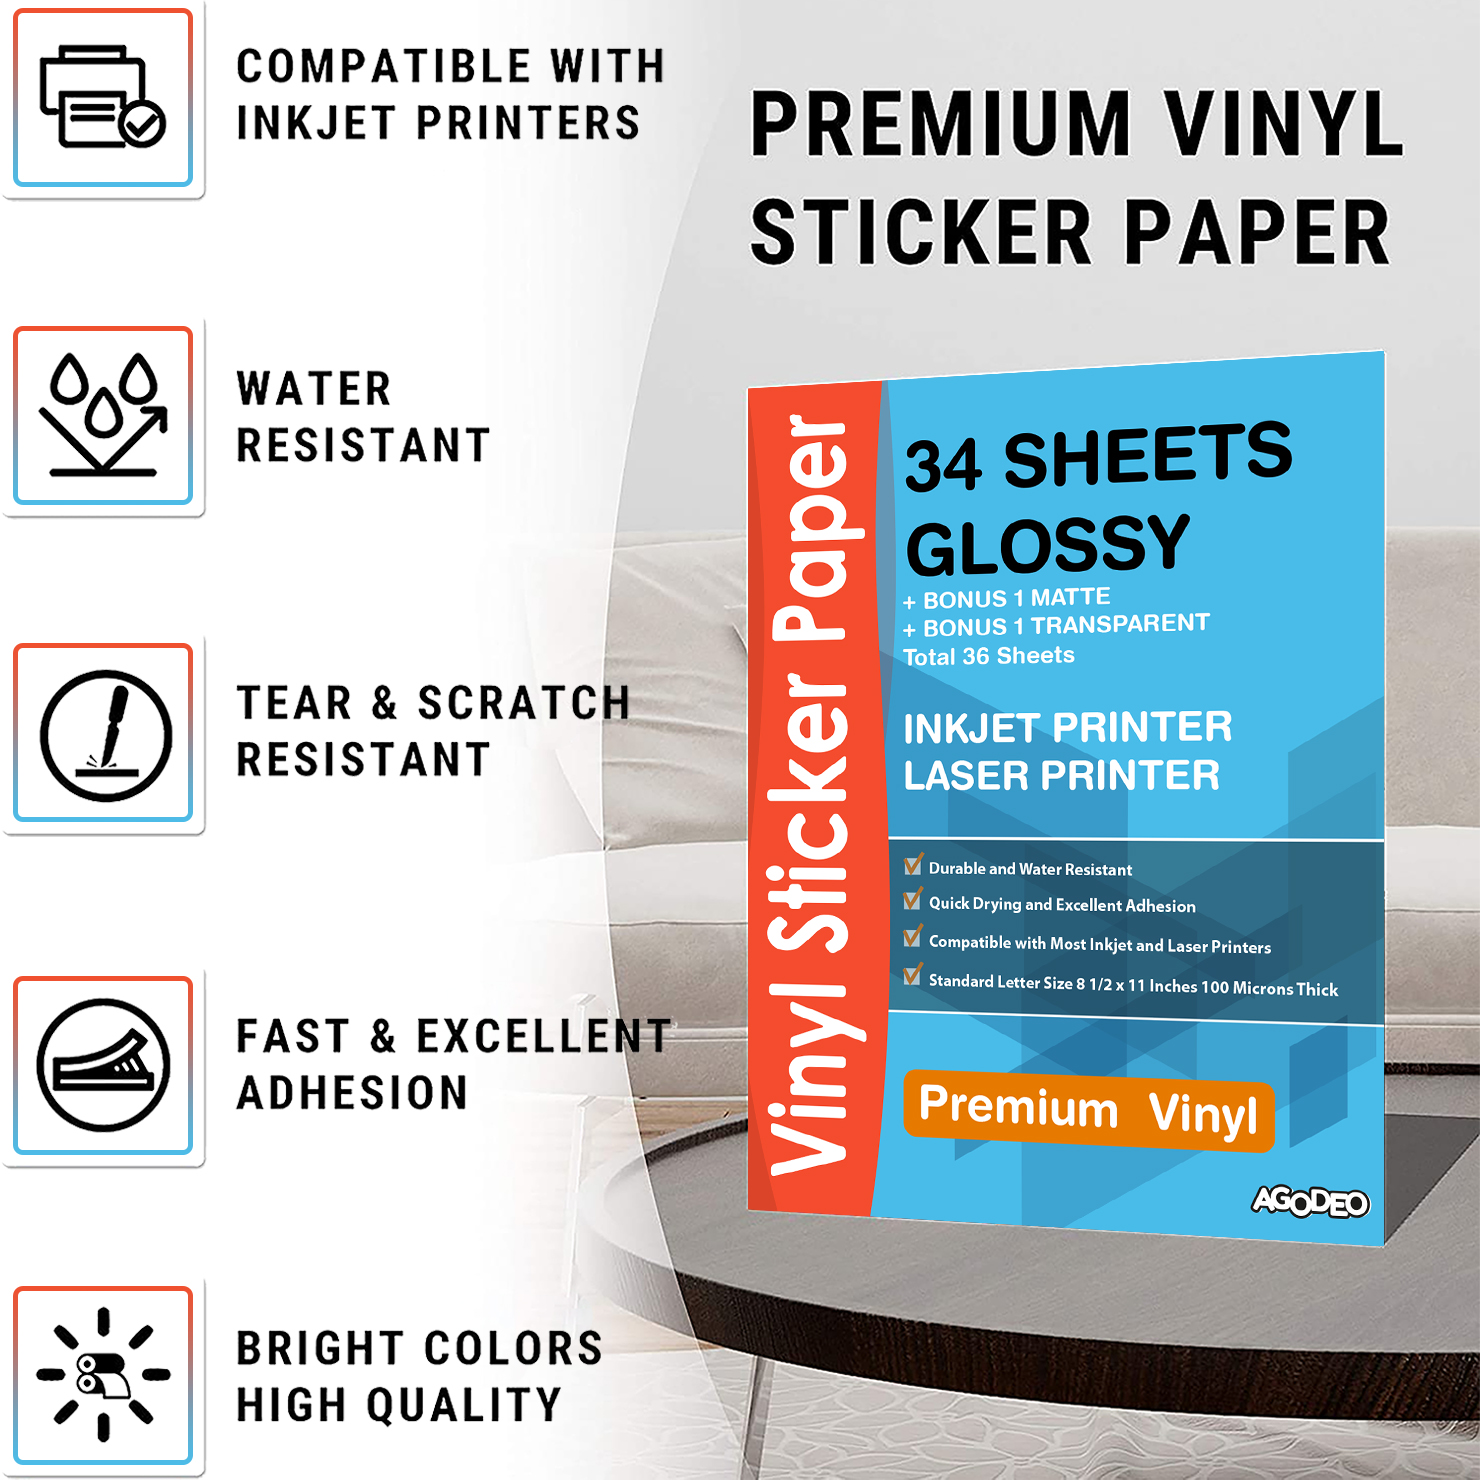 Royal Elements Glossy Printable Vinyl Sticker Paper for Inkjet Printers - 20 Waterproof Sheets (Photo-Like Print Quality)